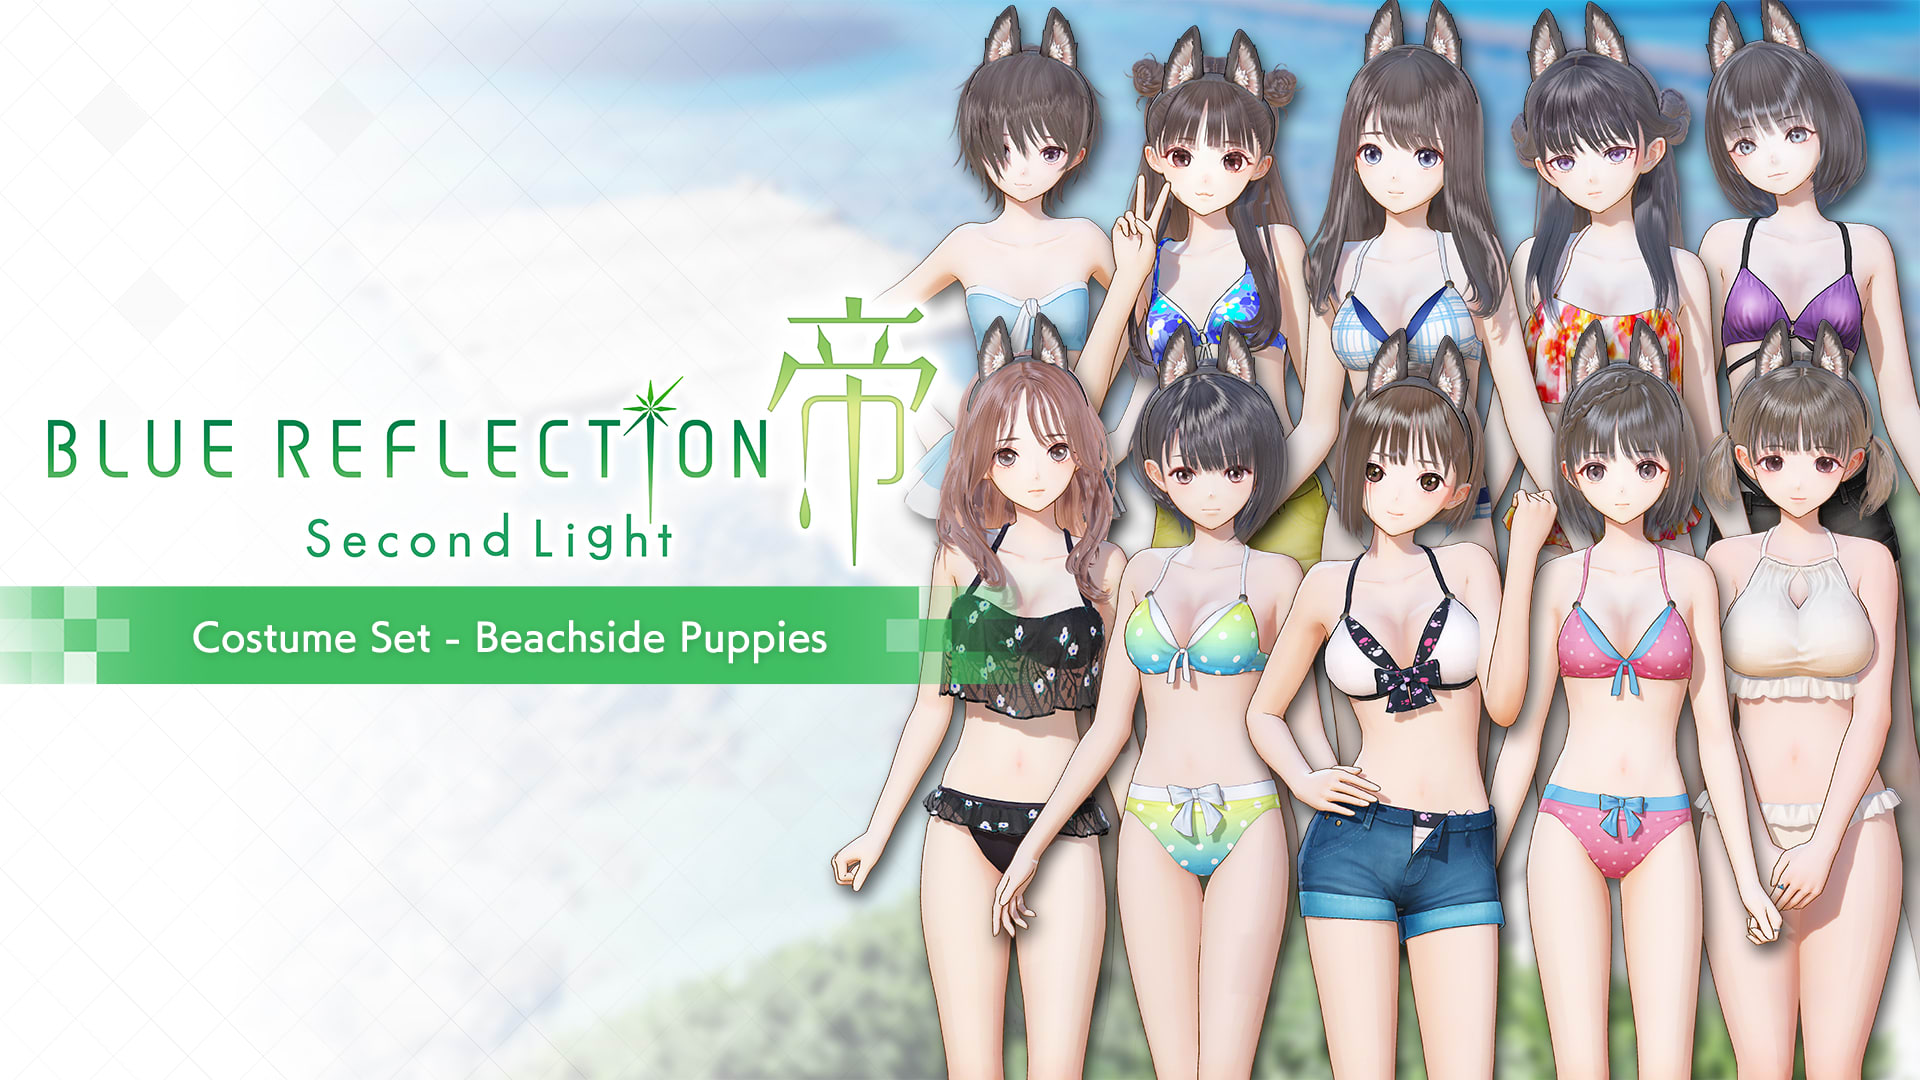 Costume Set - Beachside Puppies